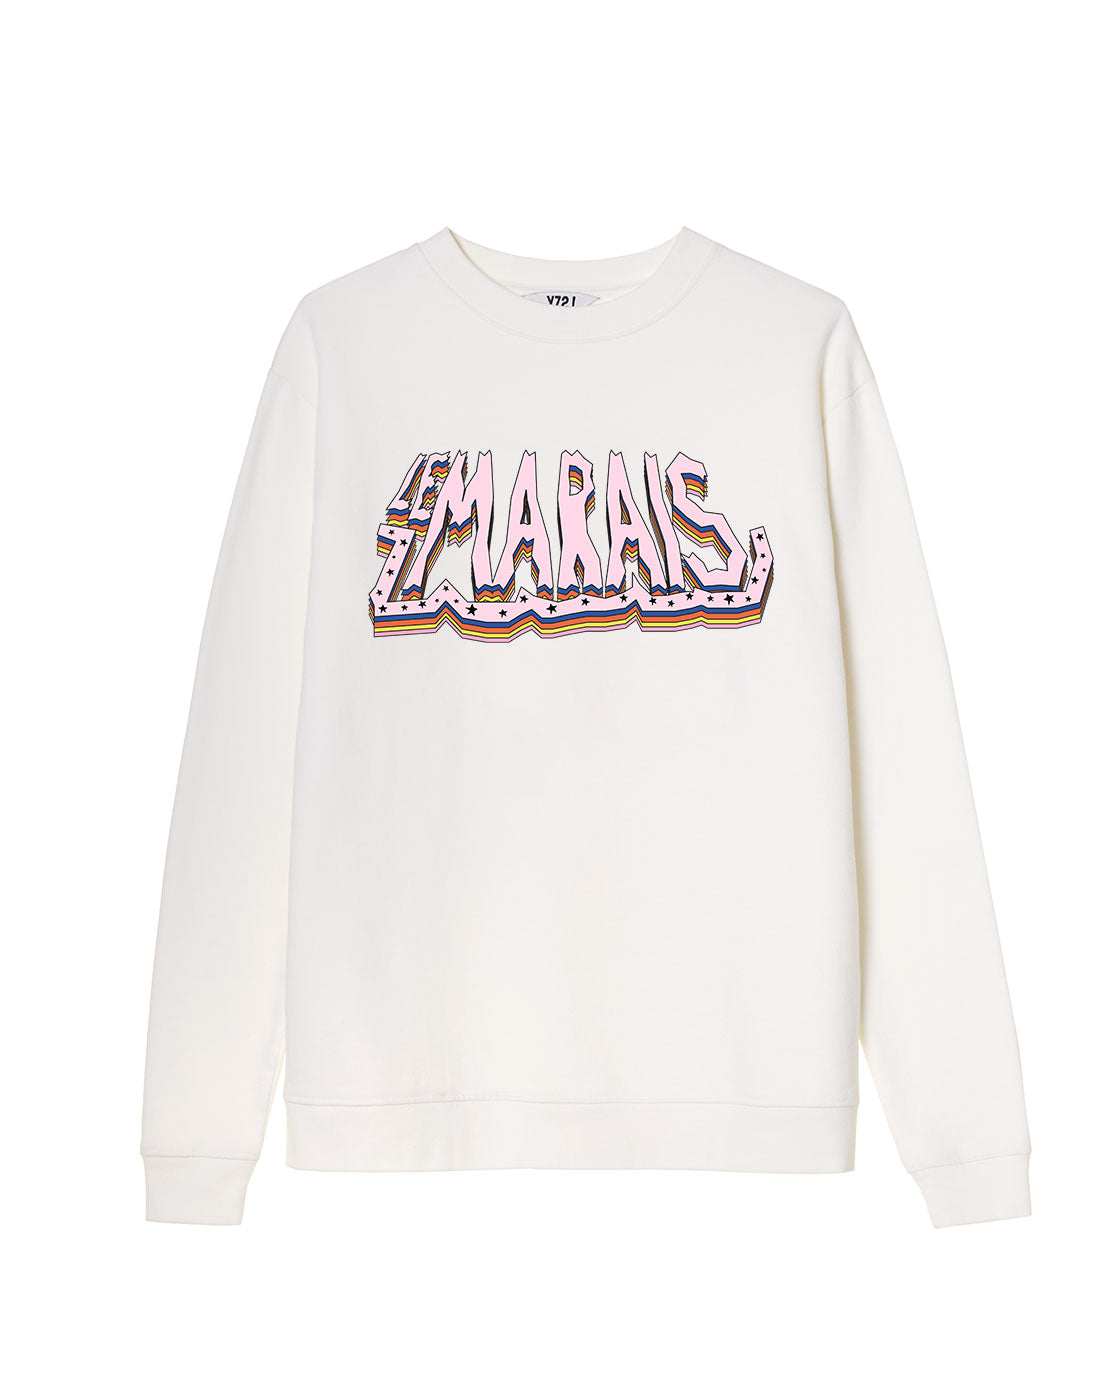 YZLS Le Marais sweater